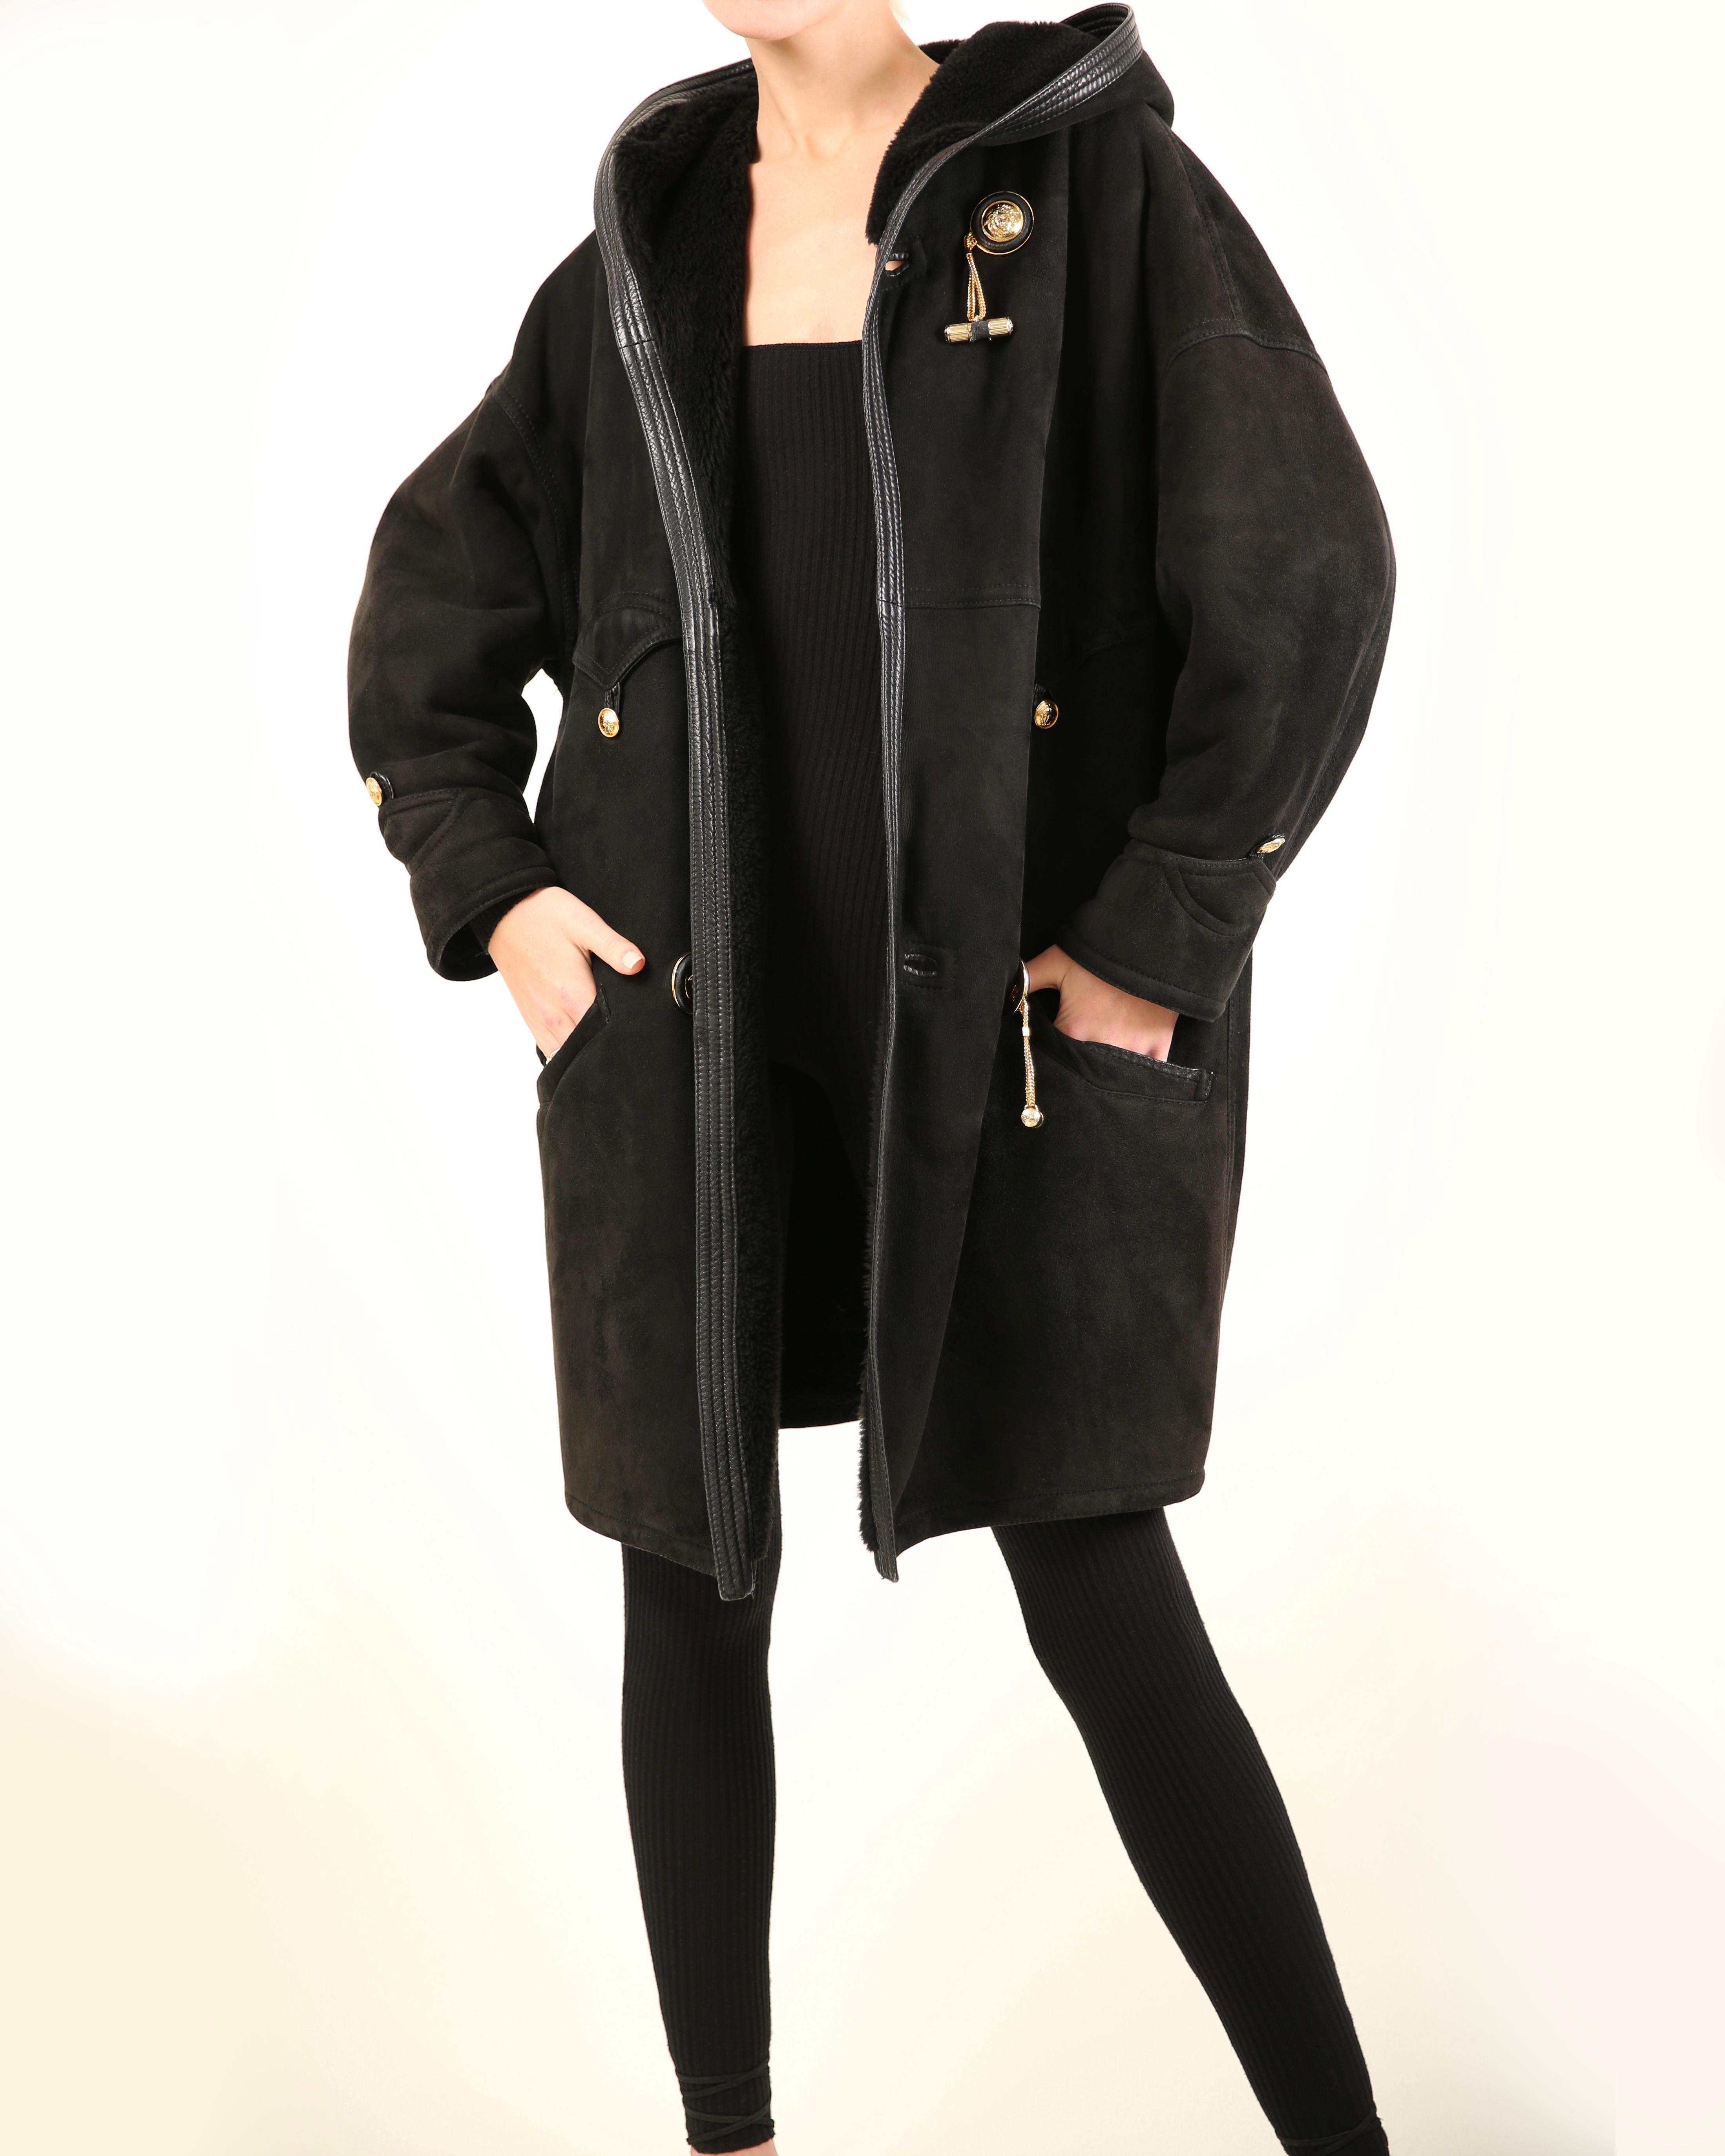 Gianni Versace 90's XS - L black leather suede shearling bondage coat jacket For Sale 5